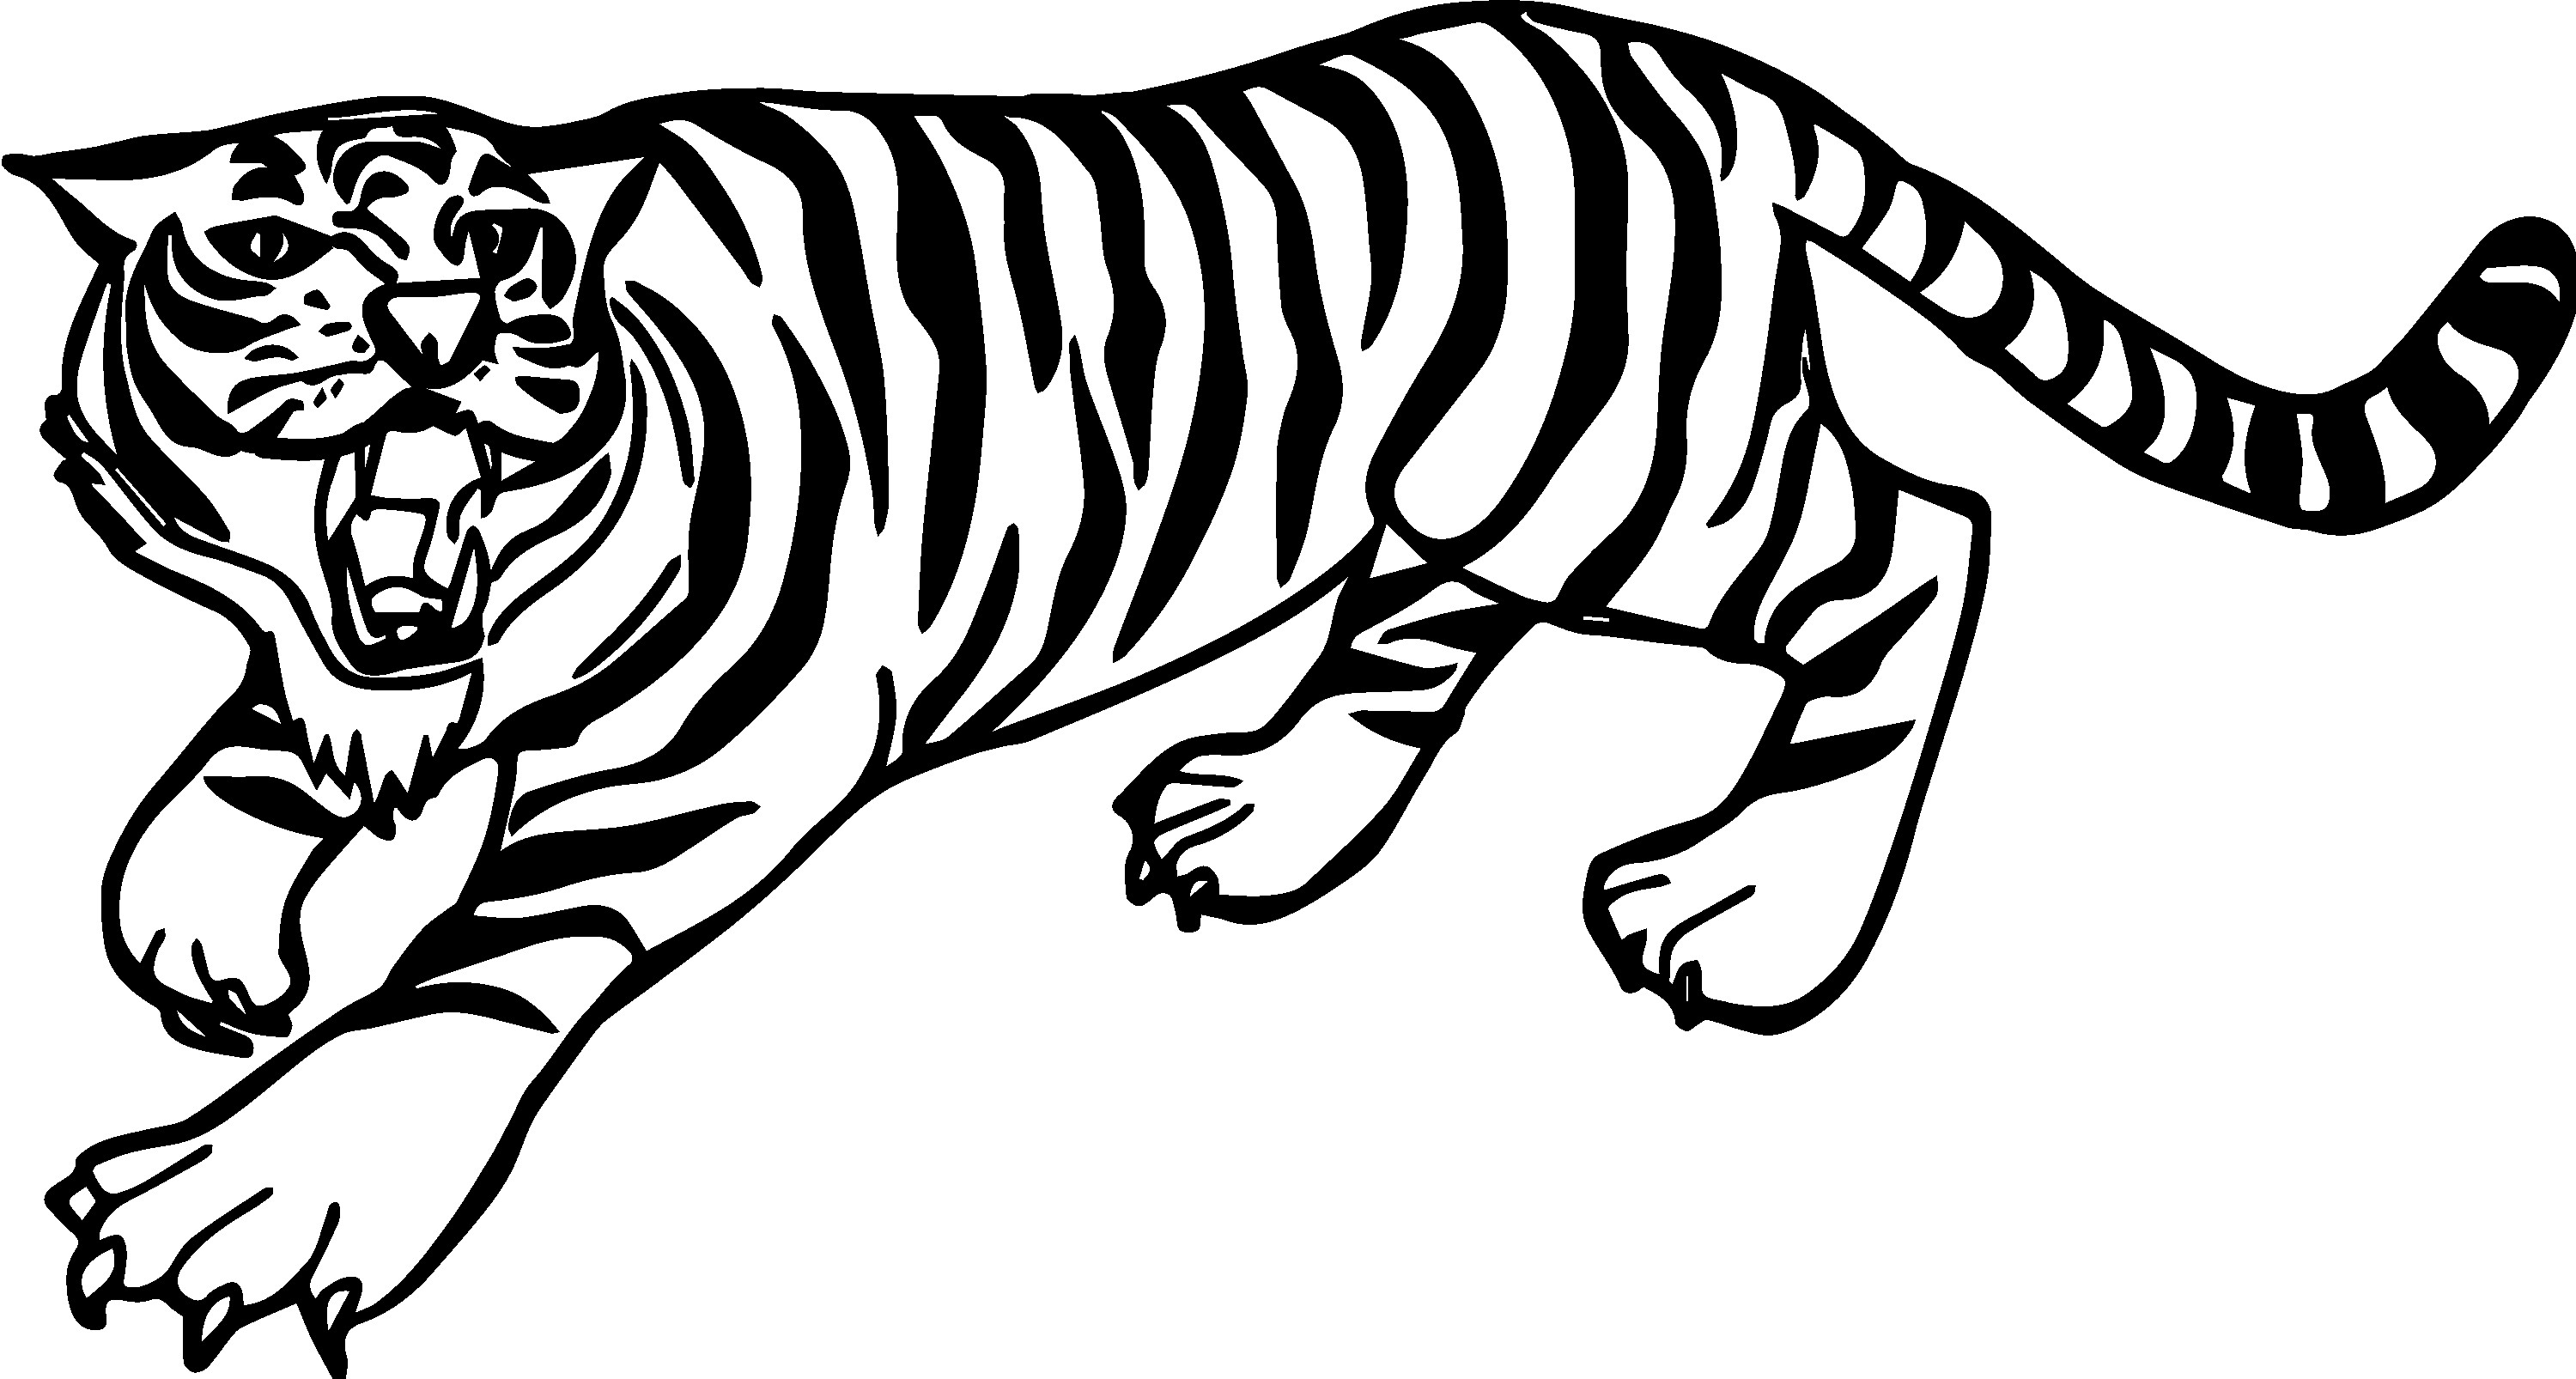 Bengal Tiger Coloring Page at Free printable